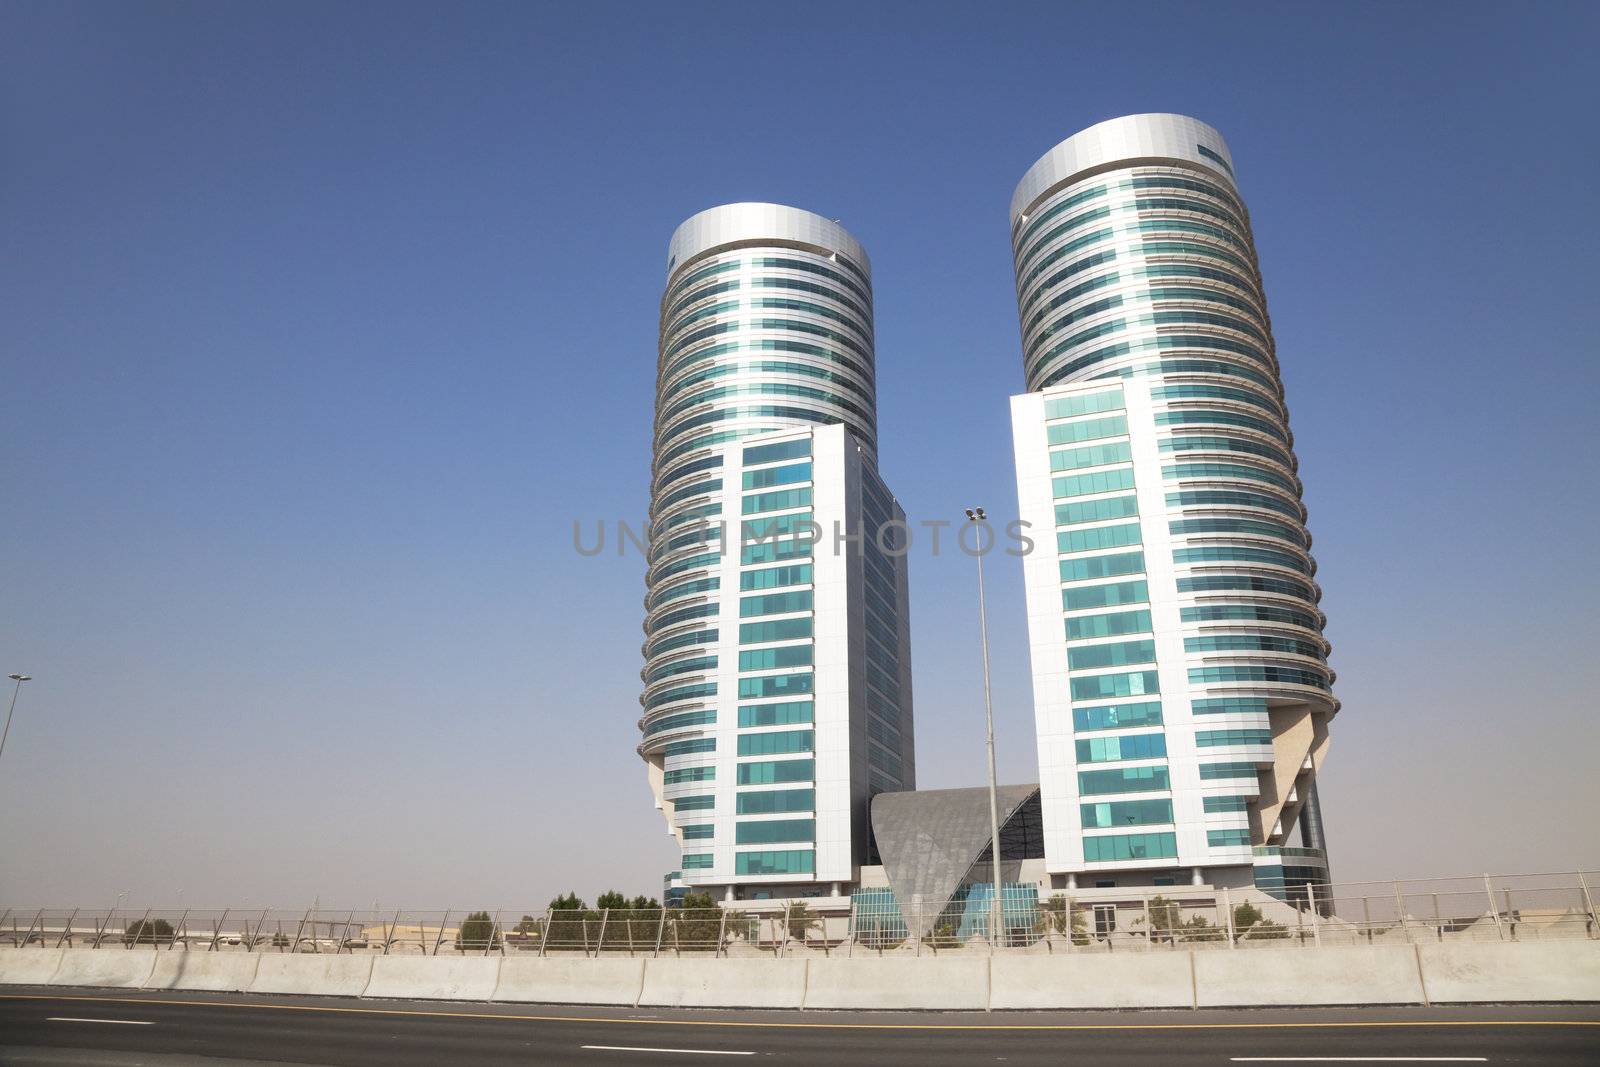 Modern Building in the Desert, Dubai, UAE by shariffc